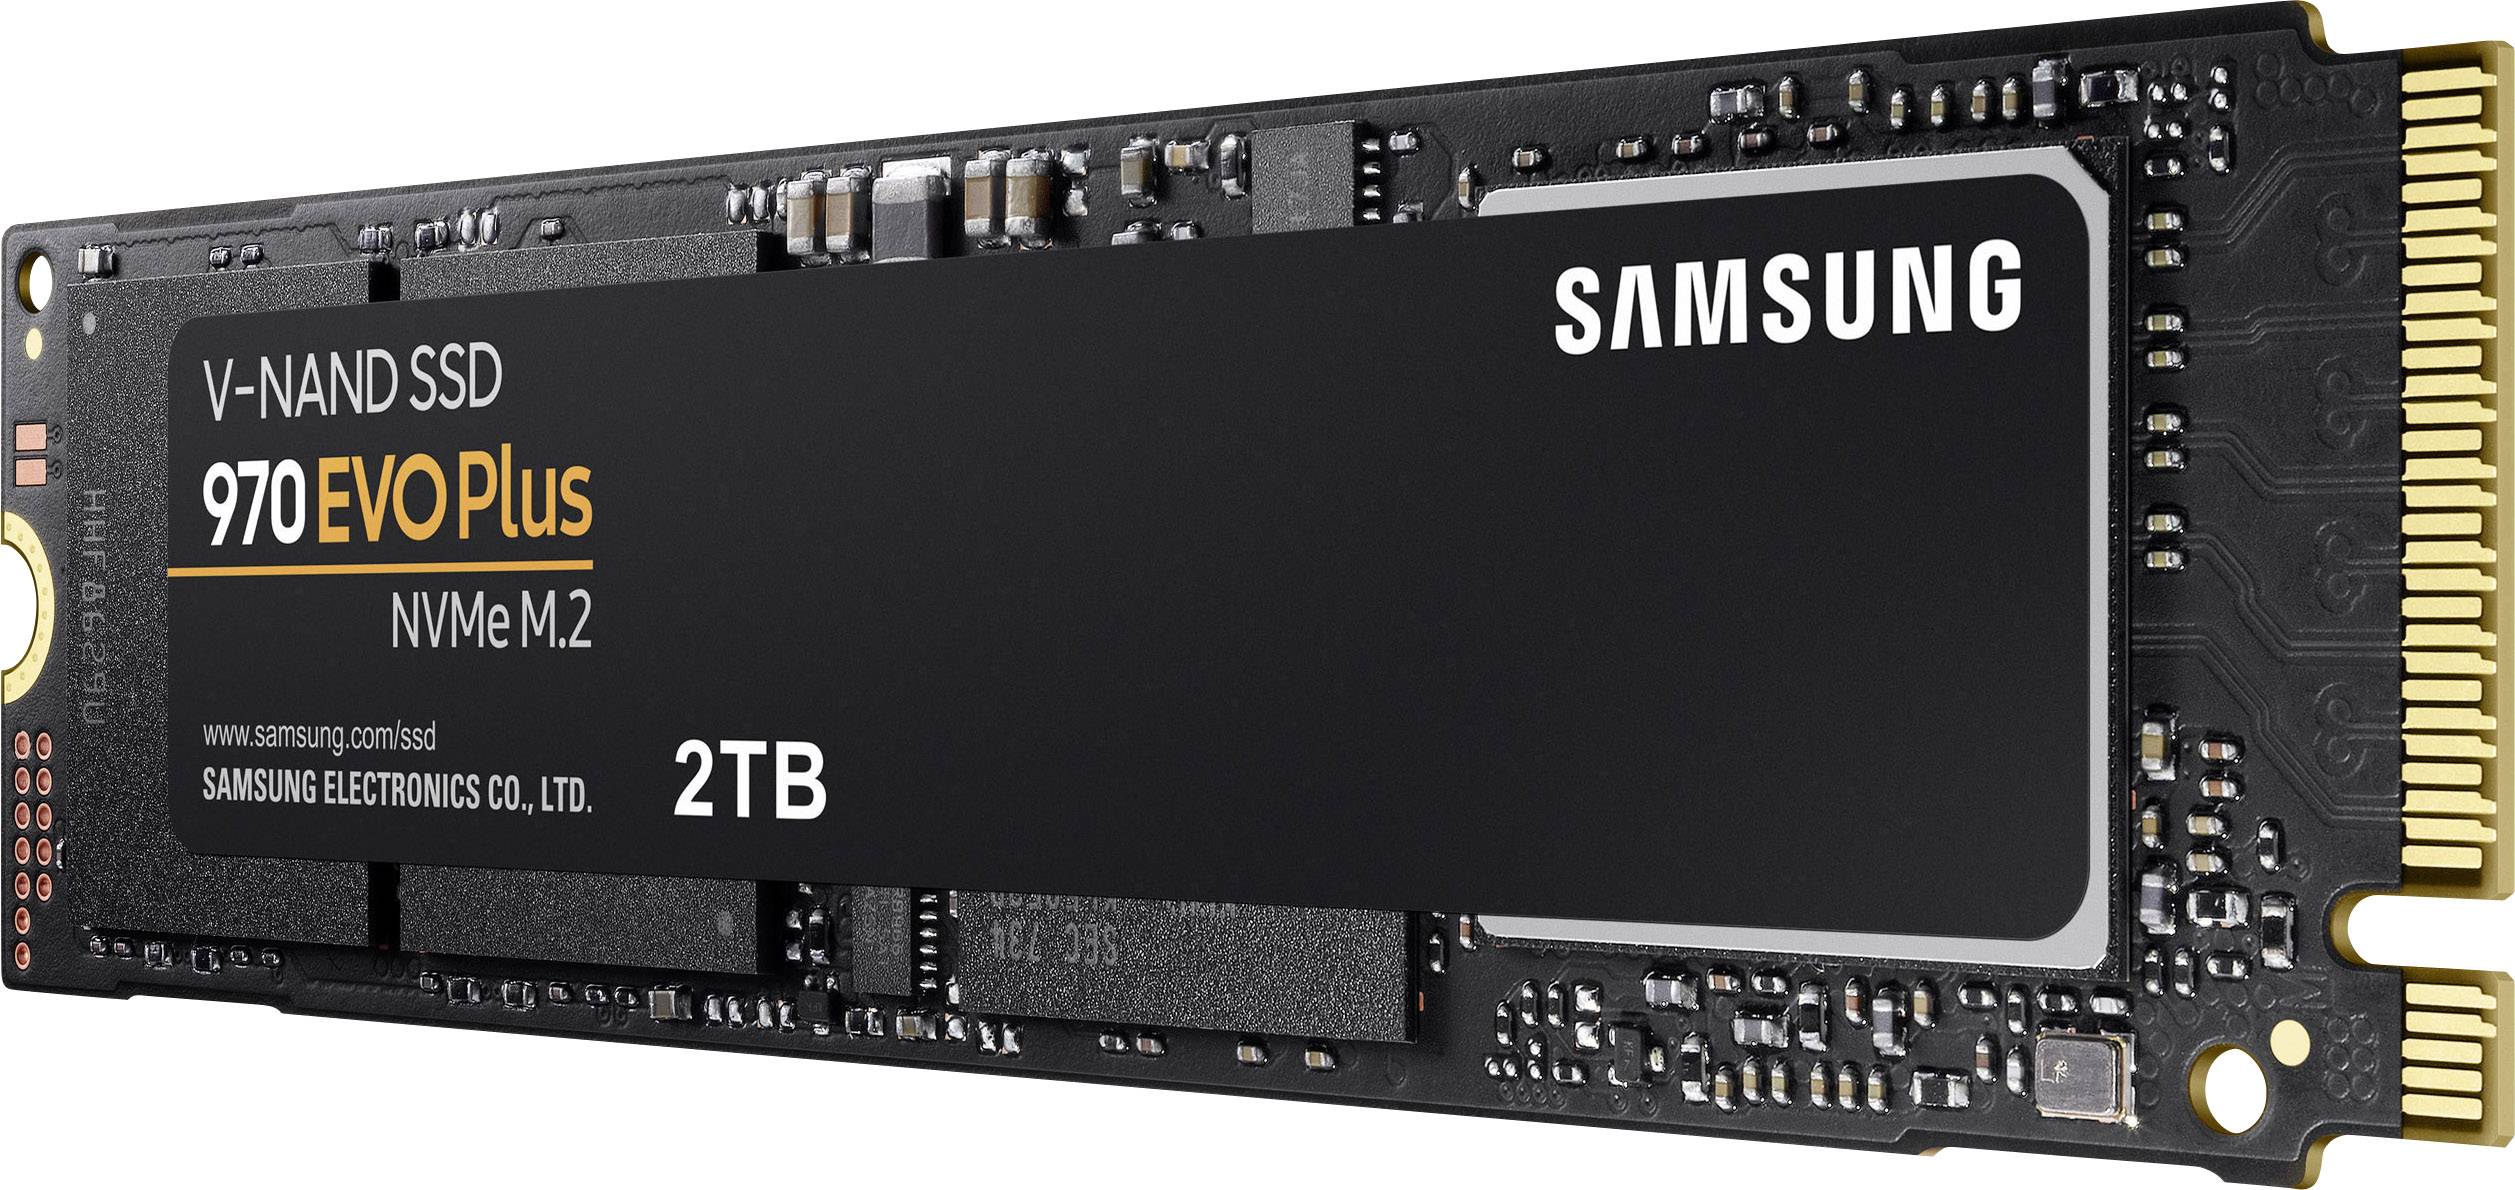 Samsung SSD 970 EVO Plus 2TBNVMe M.2,3500MB/s read,3300MB/s write